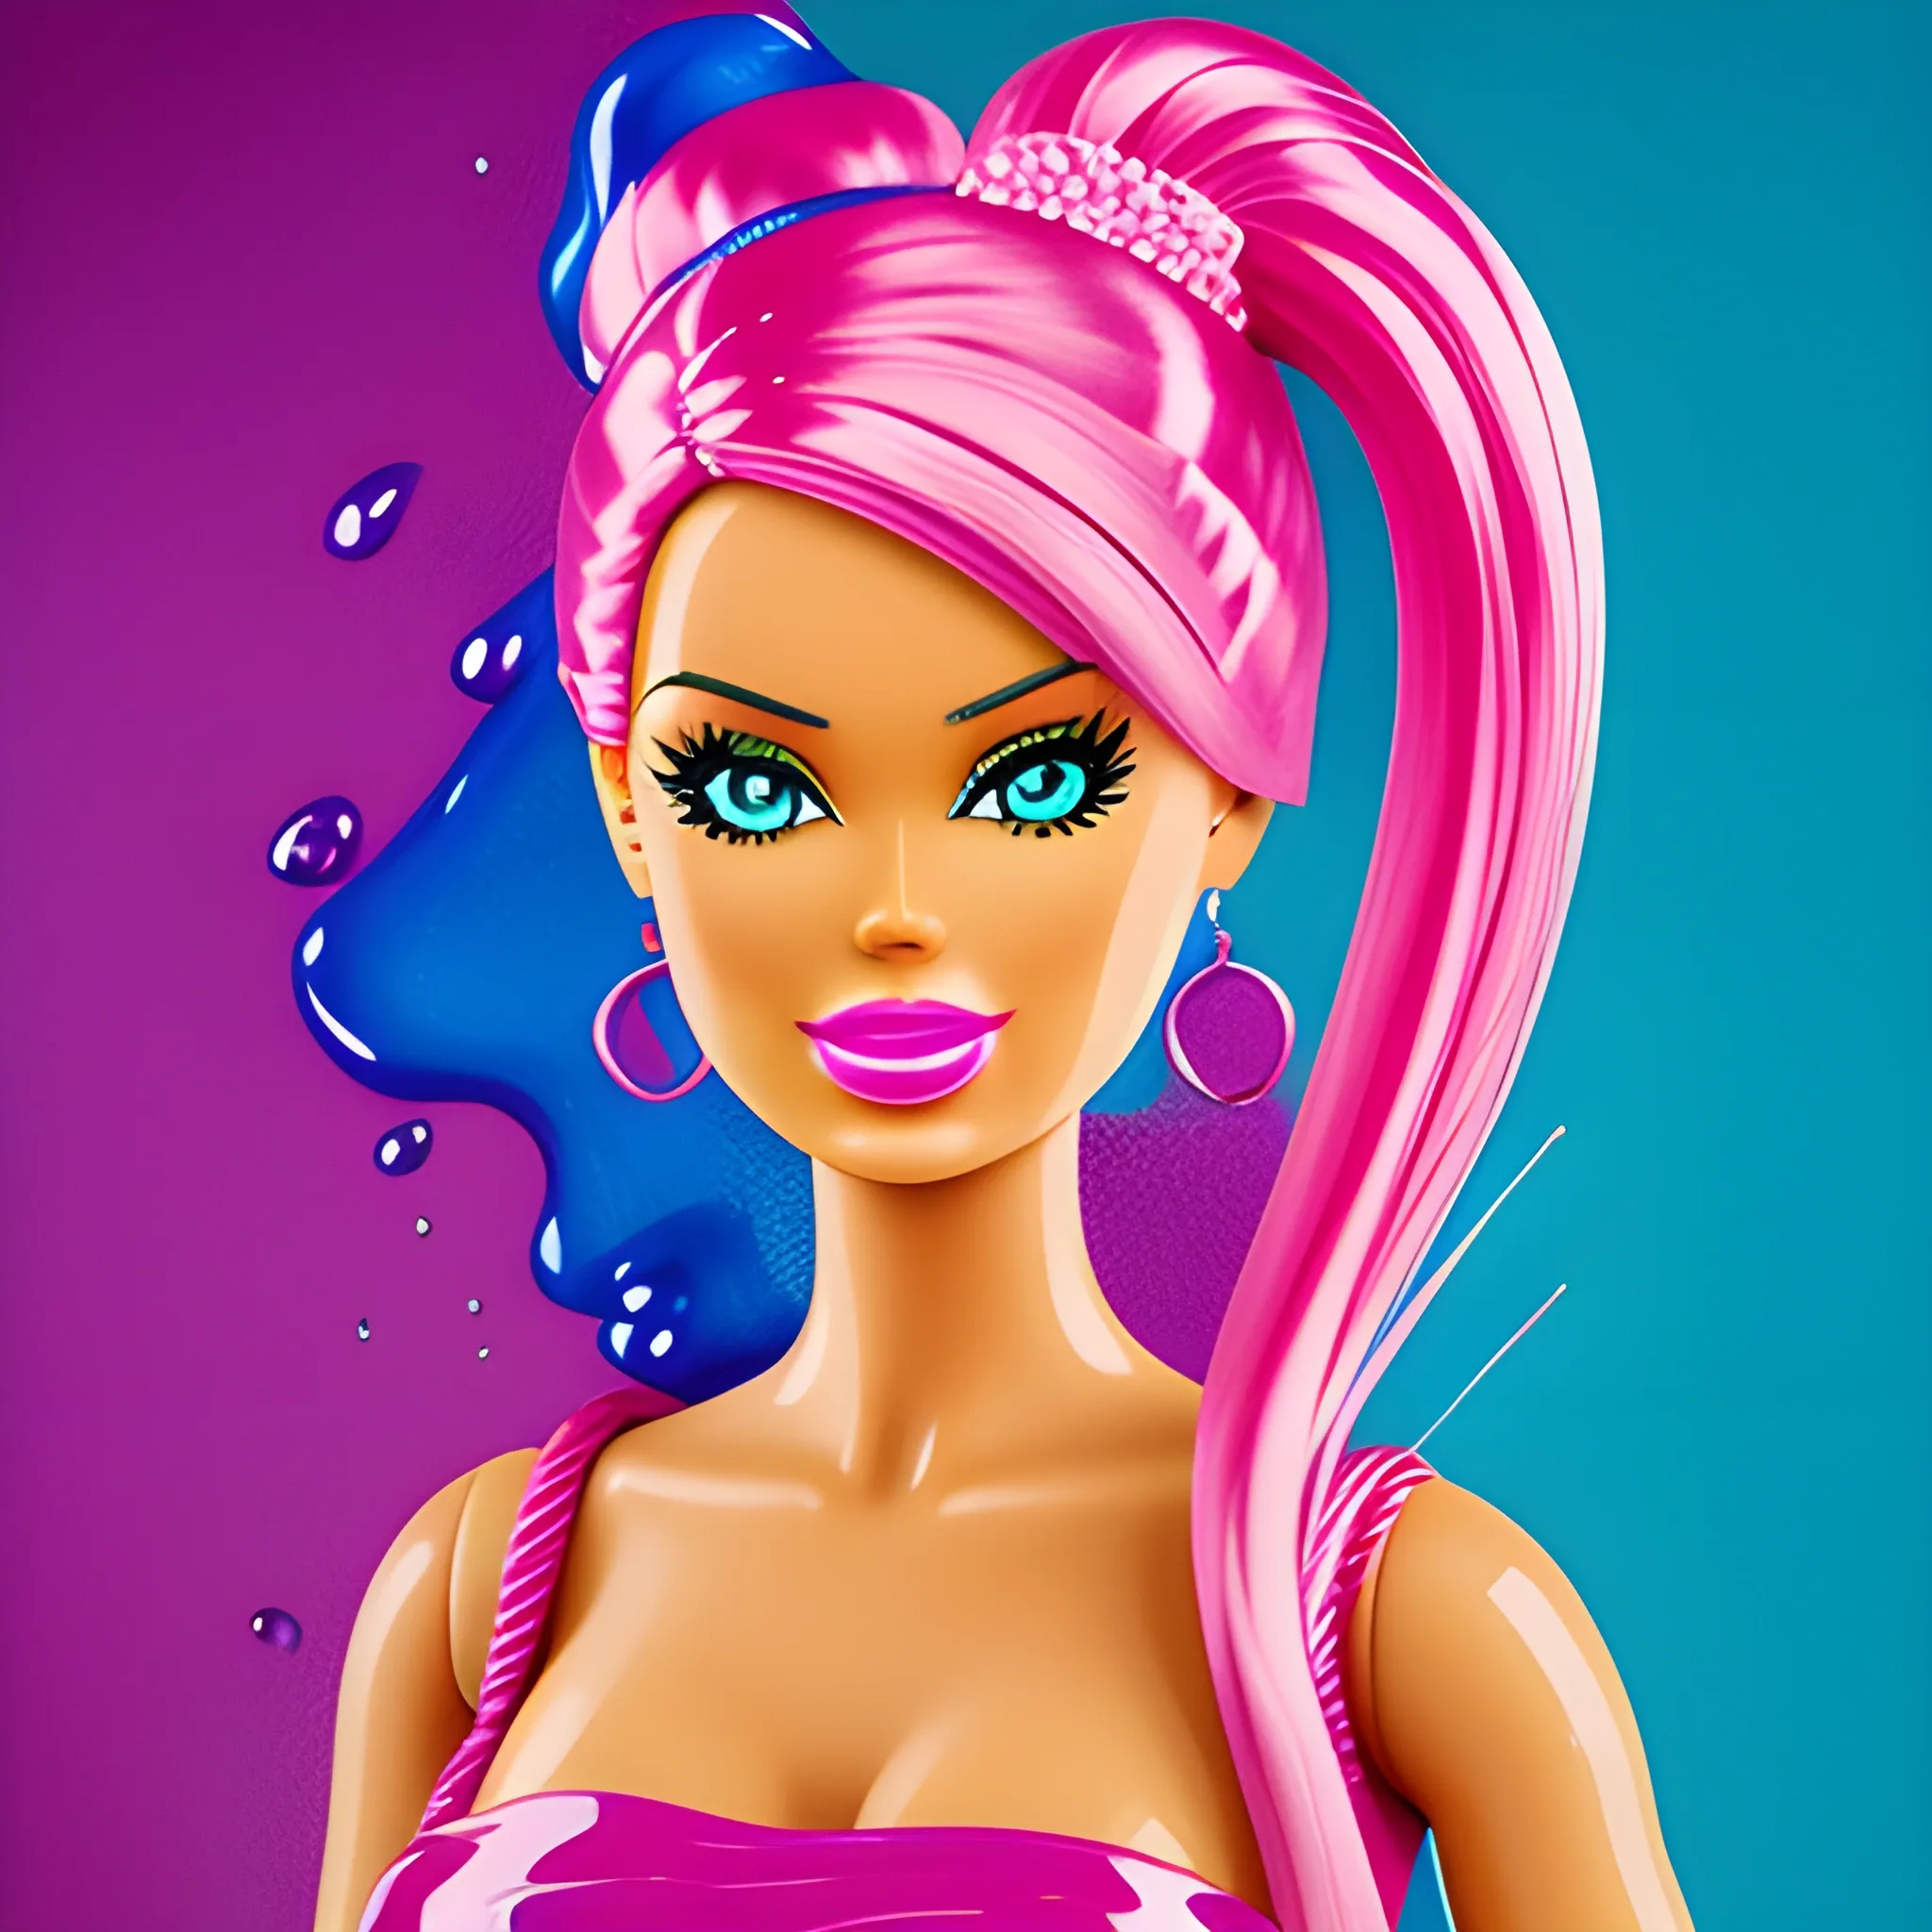 Barbie, viscous colored liquid portrait
, Cartoon